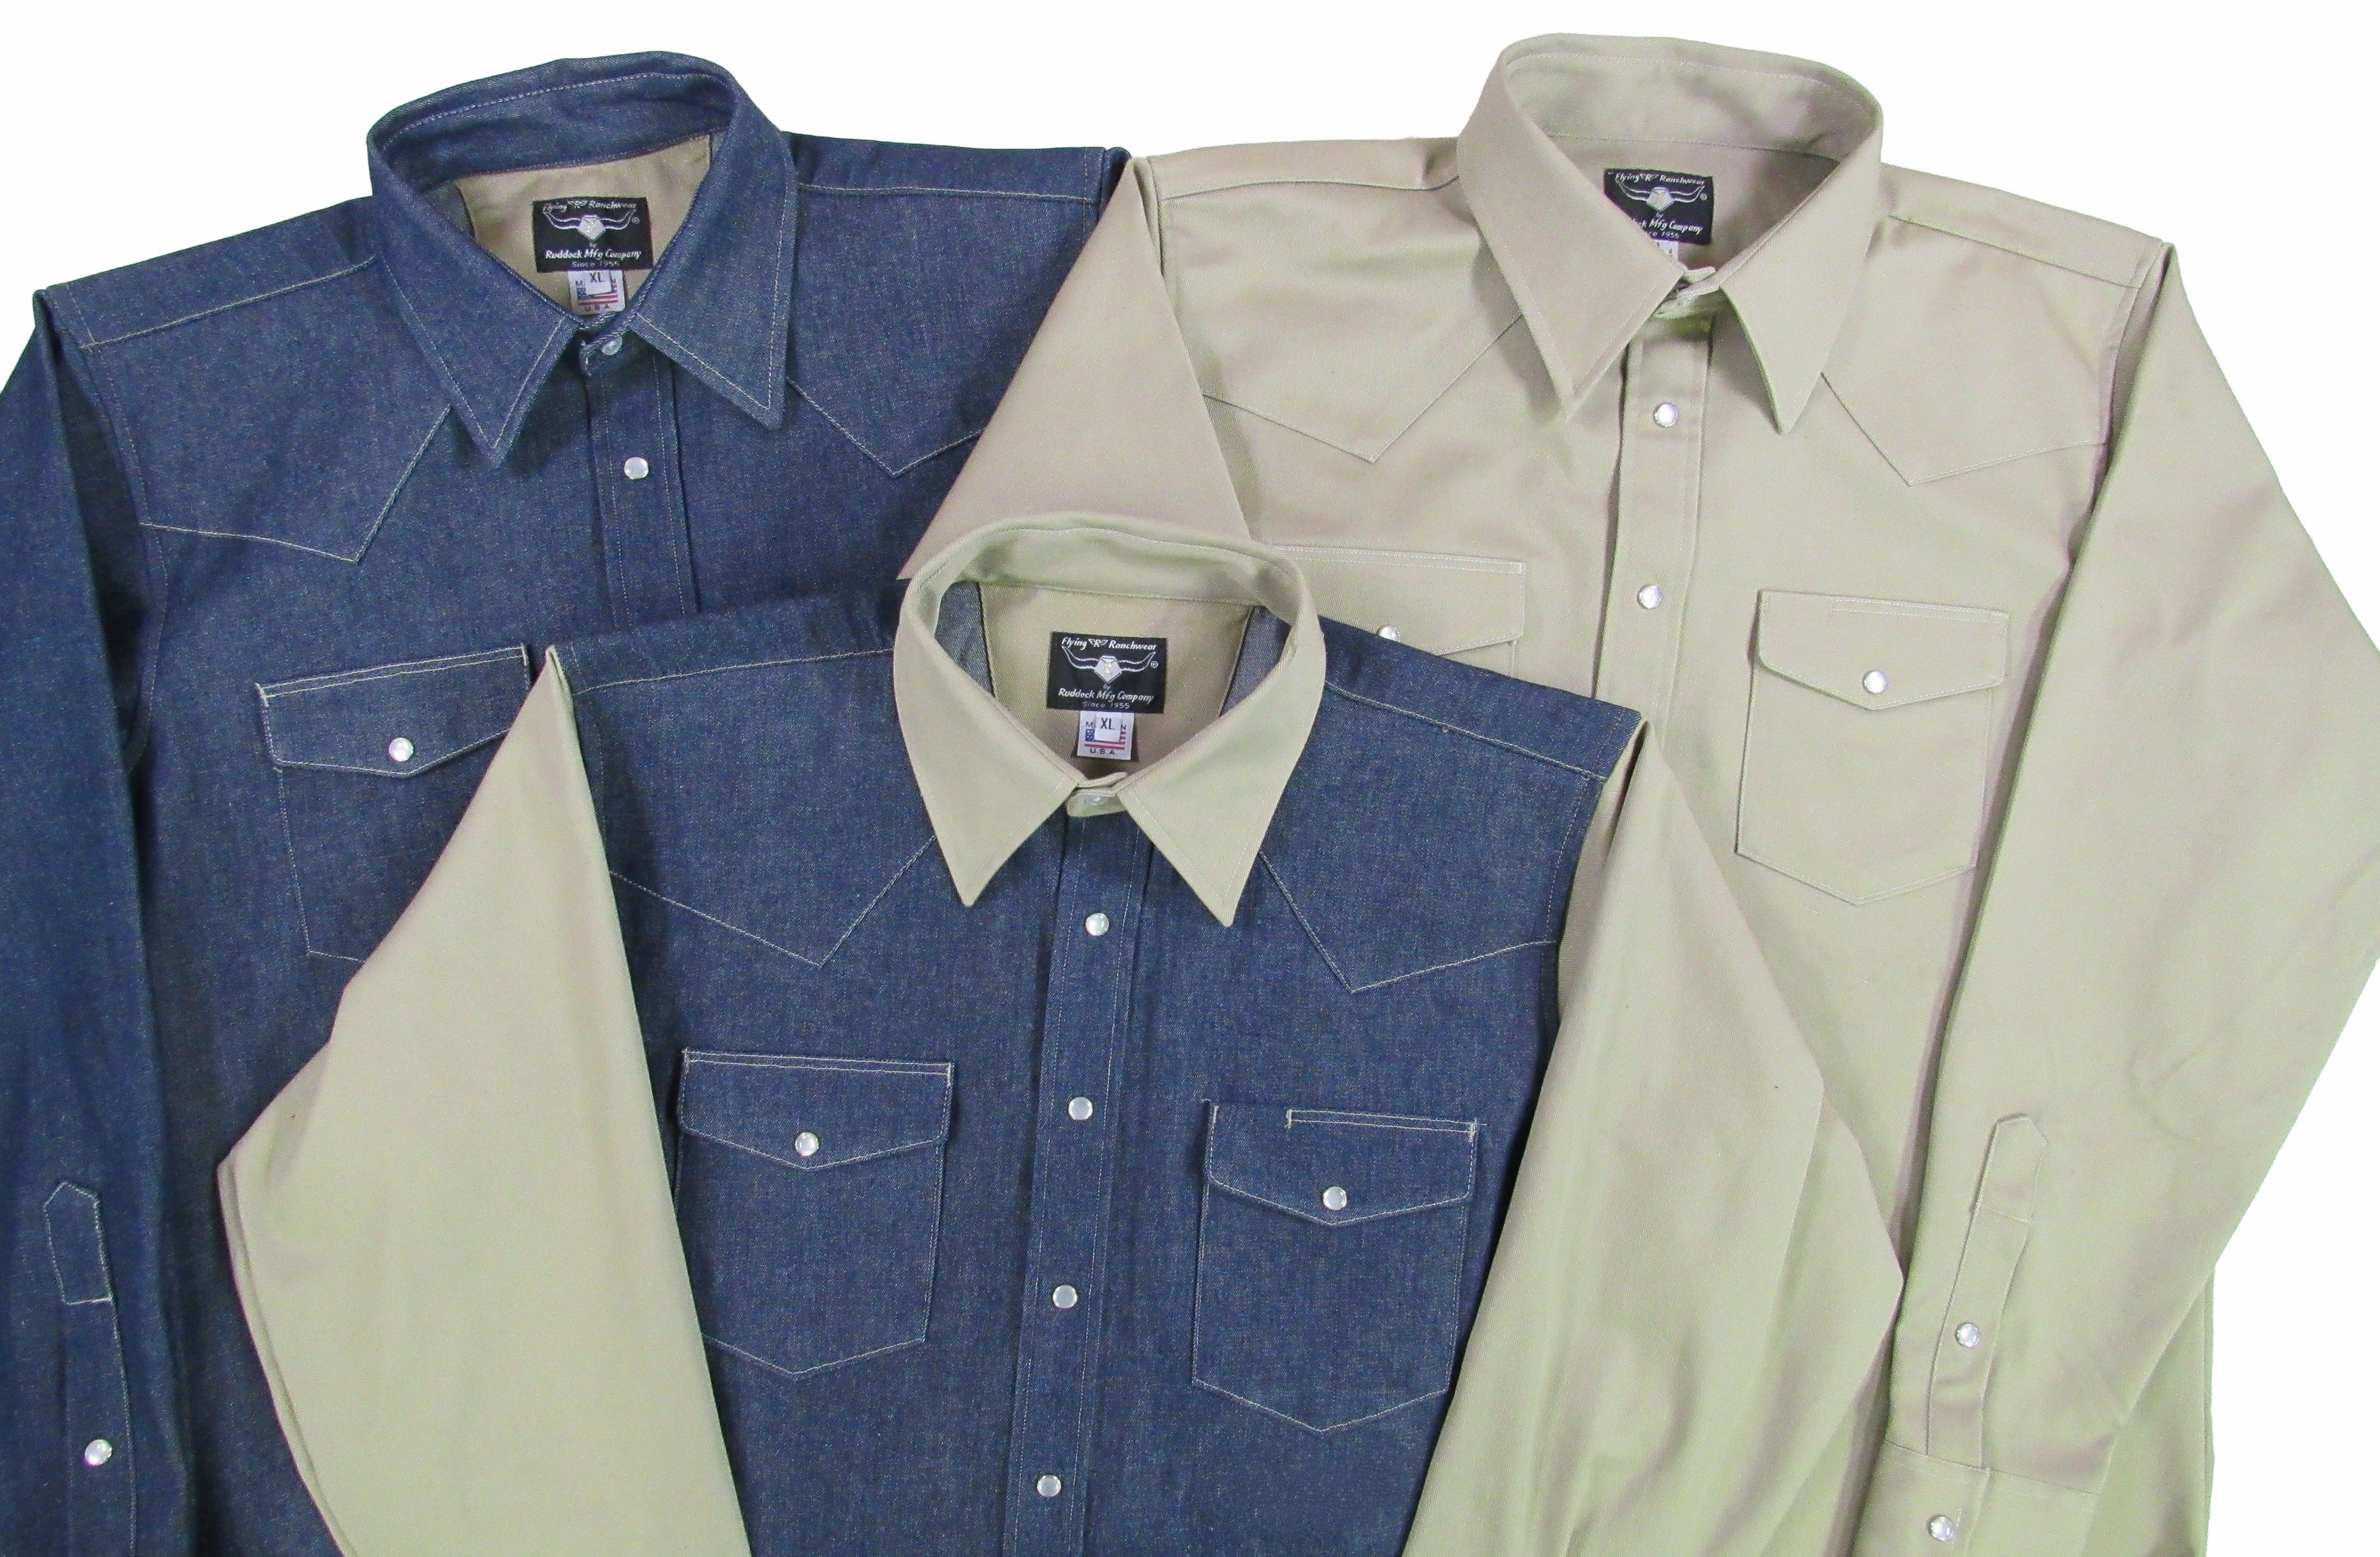 Top Denim Shirt Manufacturers in Bhiwadi - डेनिम शर्ट मनुफक्चरर्स, भिवाड़ी  - Justdial